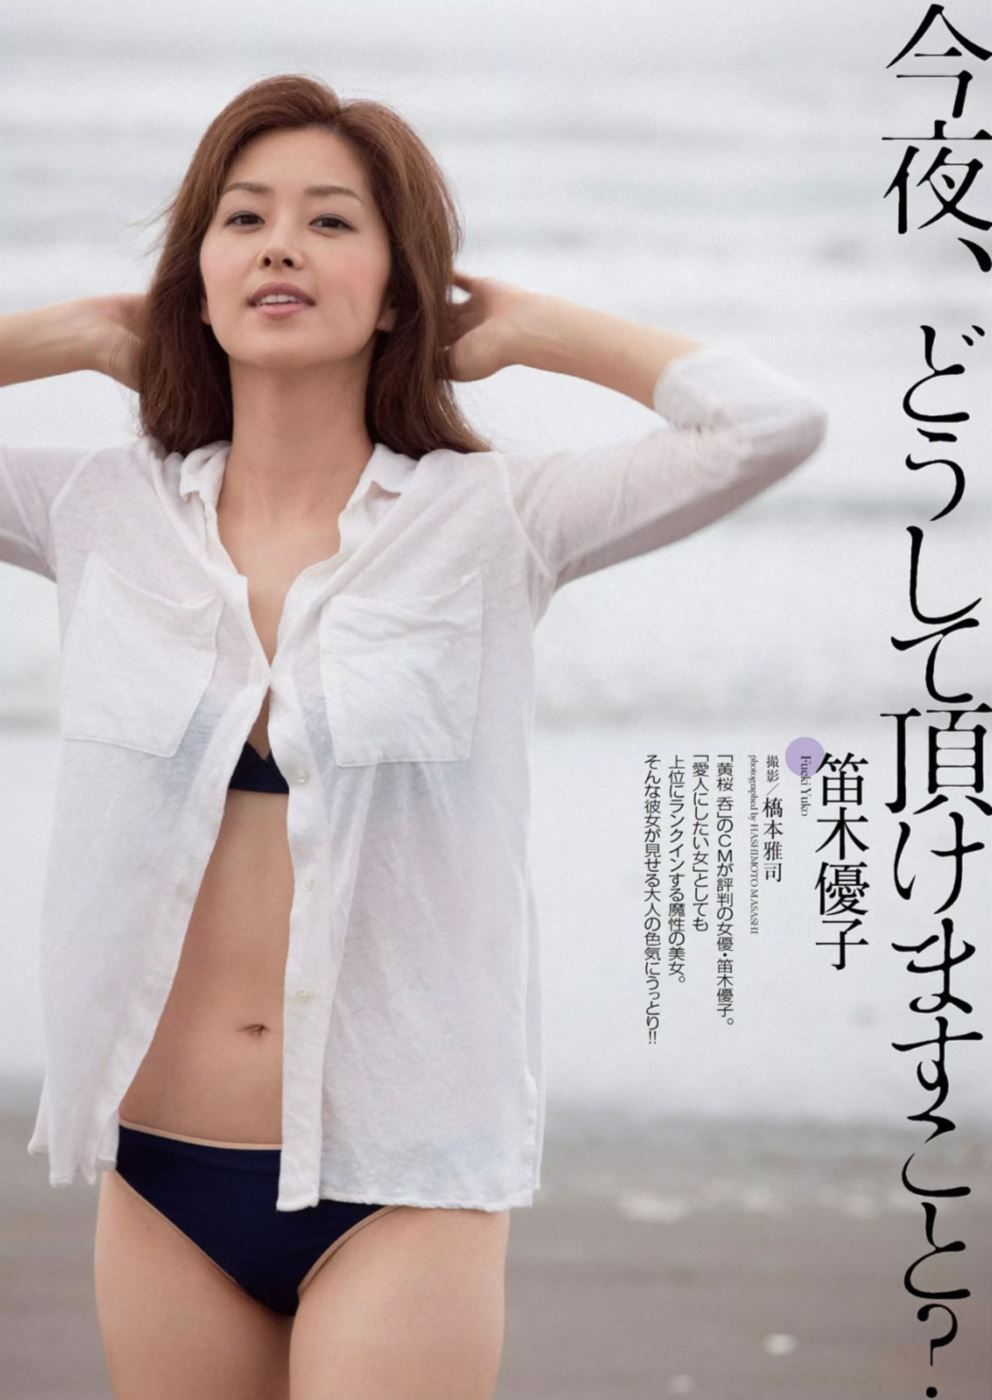 Yûko Fueki Sexy and Hottest Photos , Latest Pics